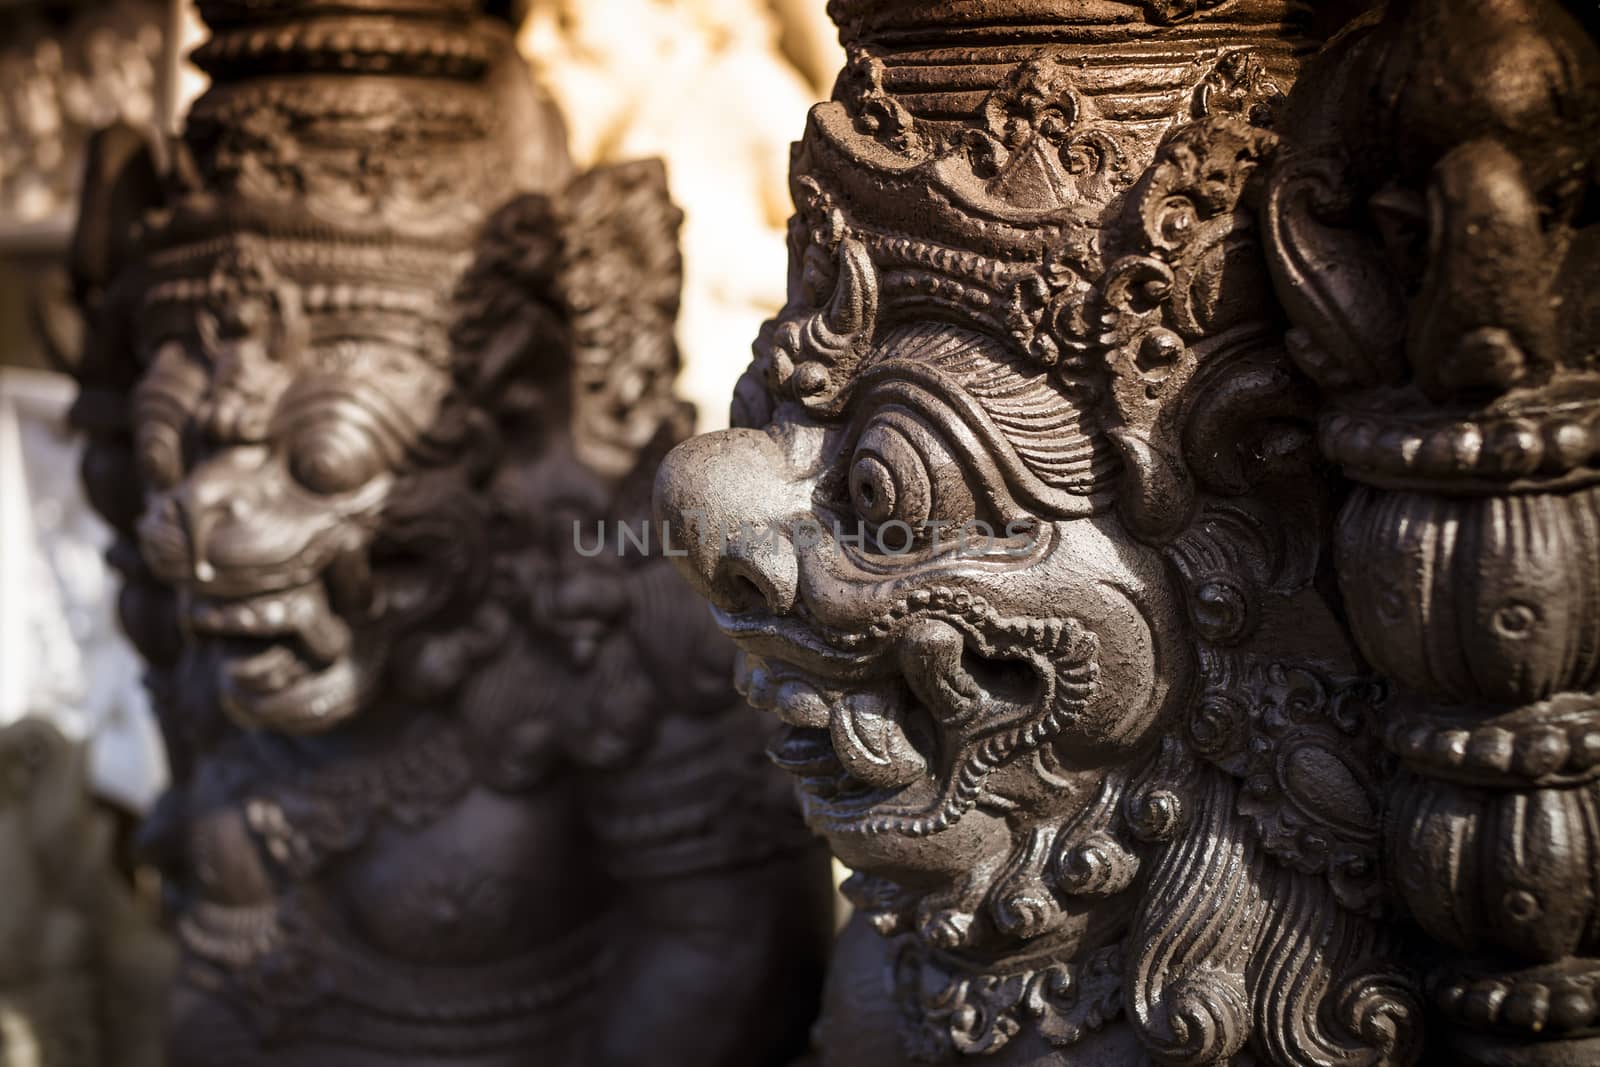 The old stone statue. Indonesia, Bali.
